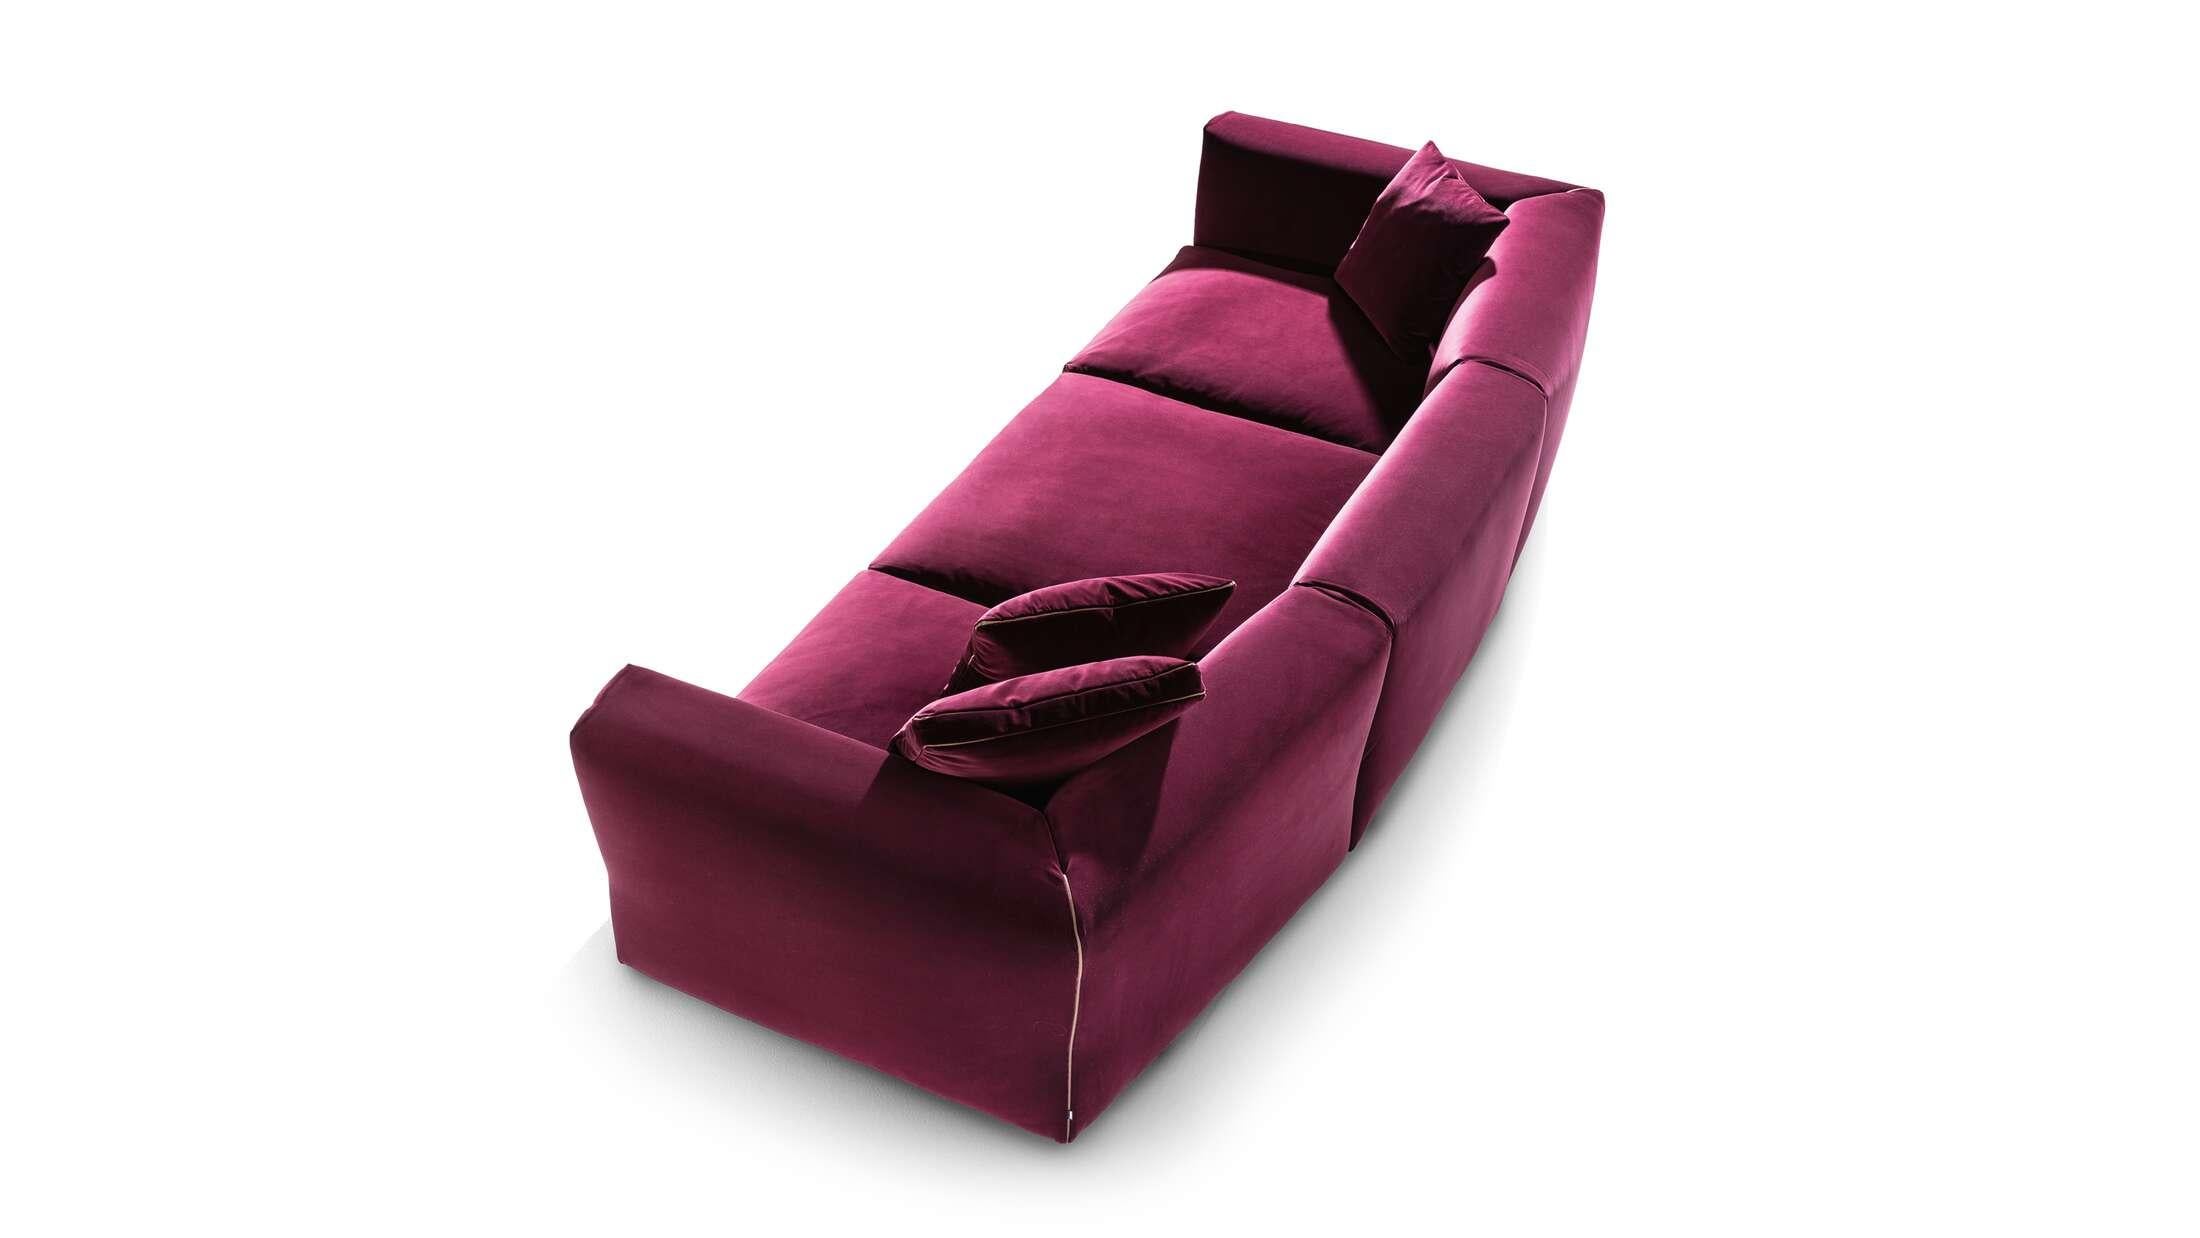 Foam Rodolfo Dordoni 'Dress Up!' Sofa for Cassina, Italy, new For Sale